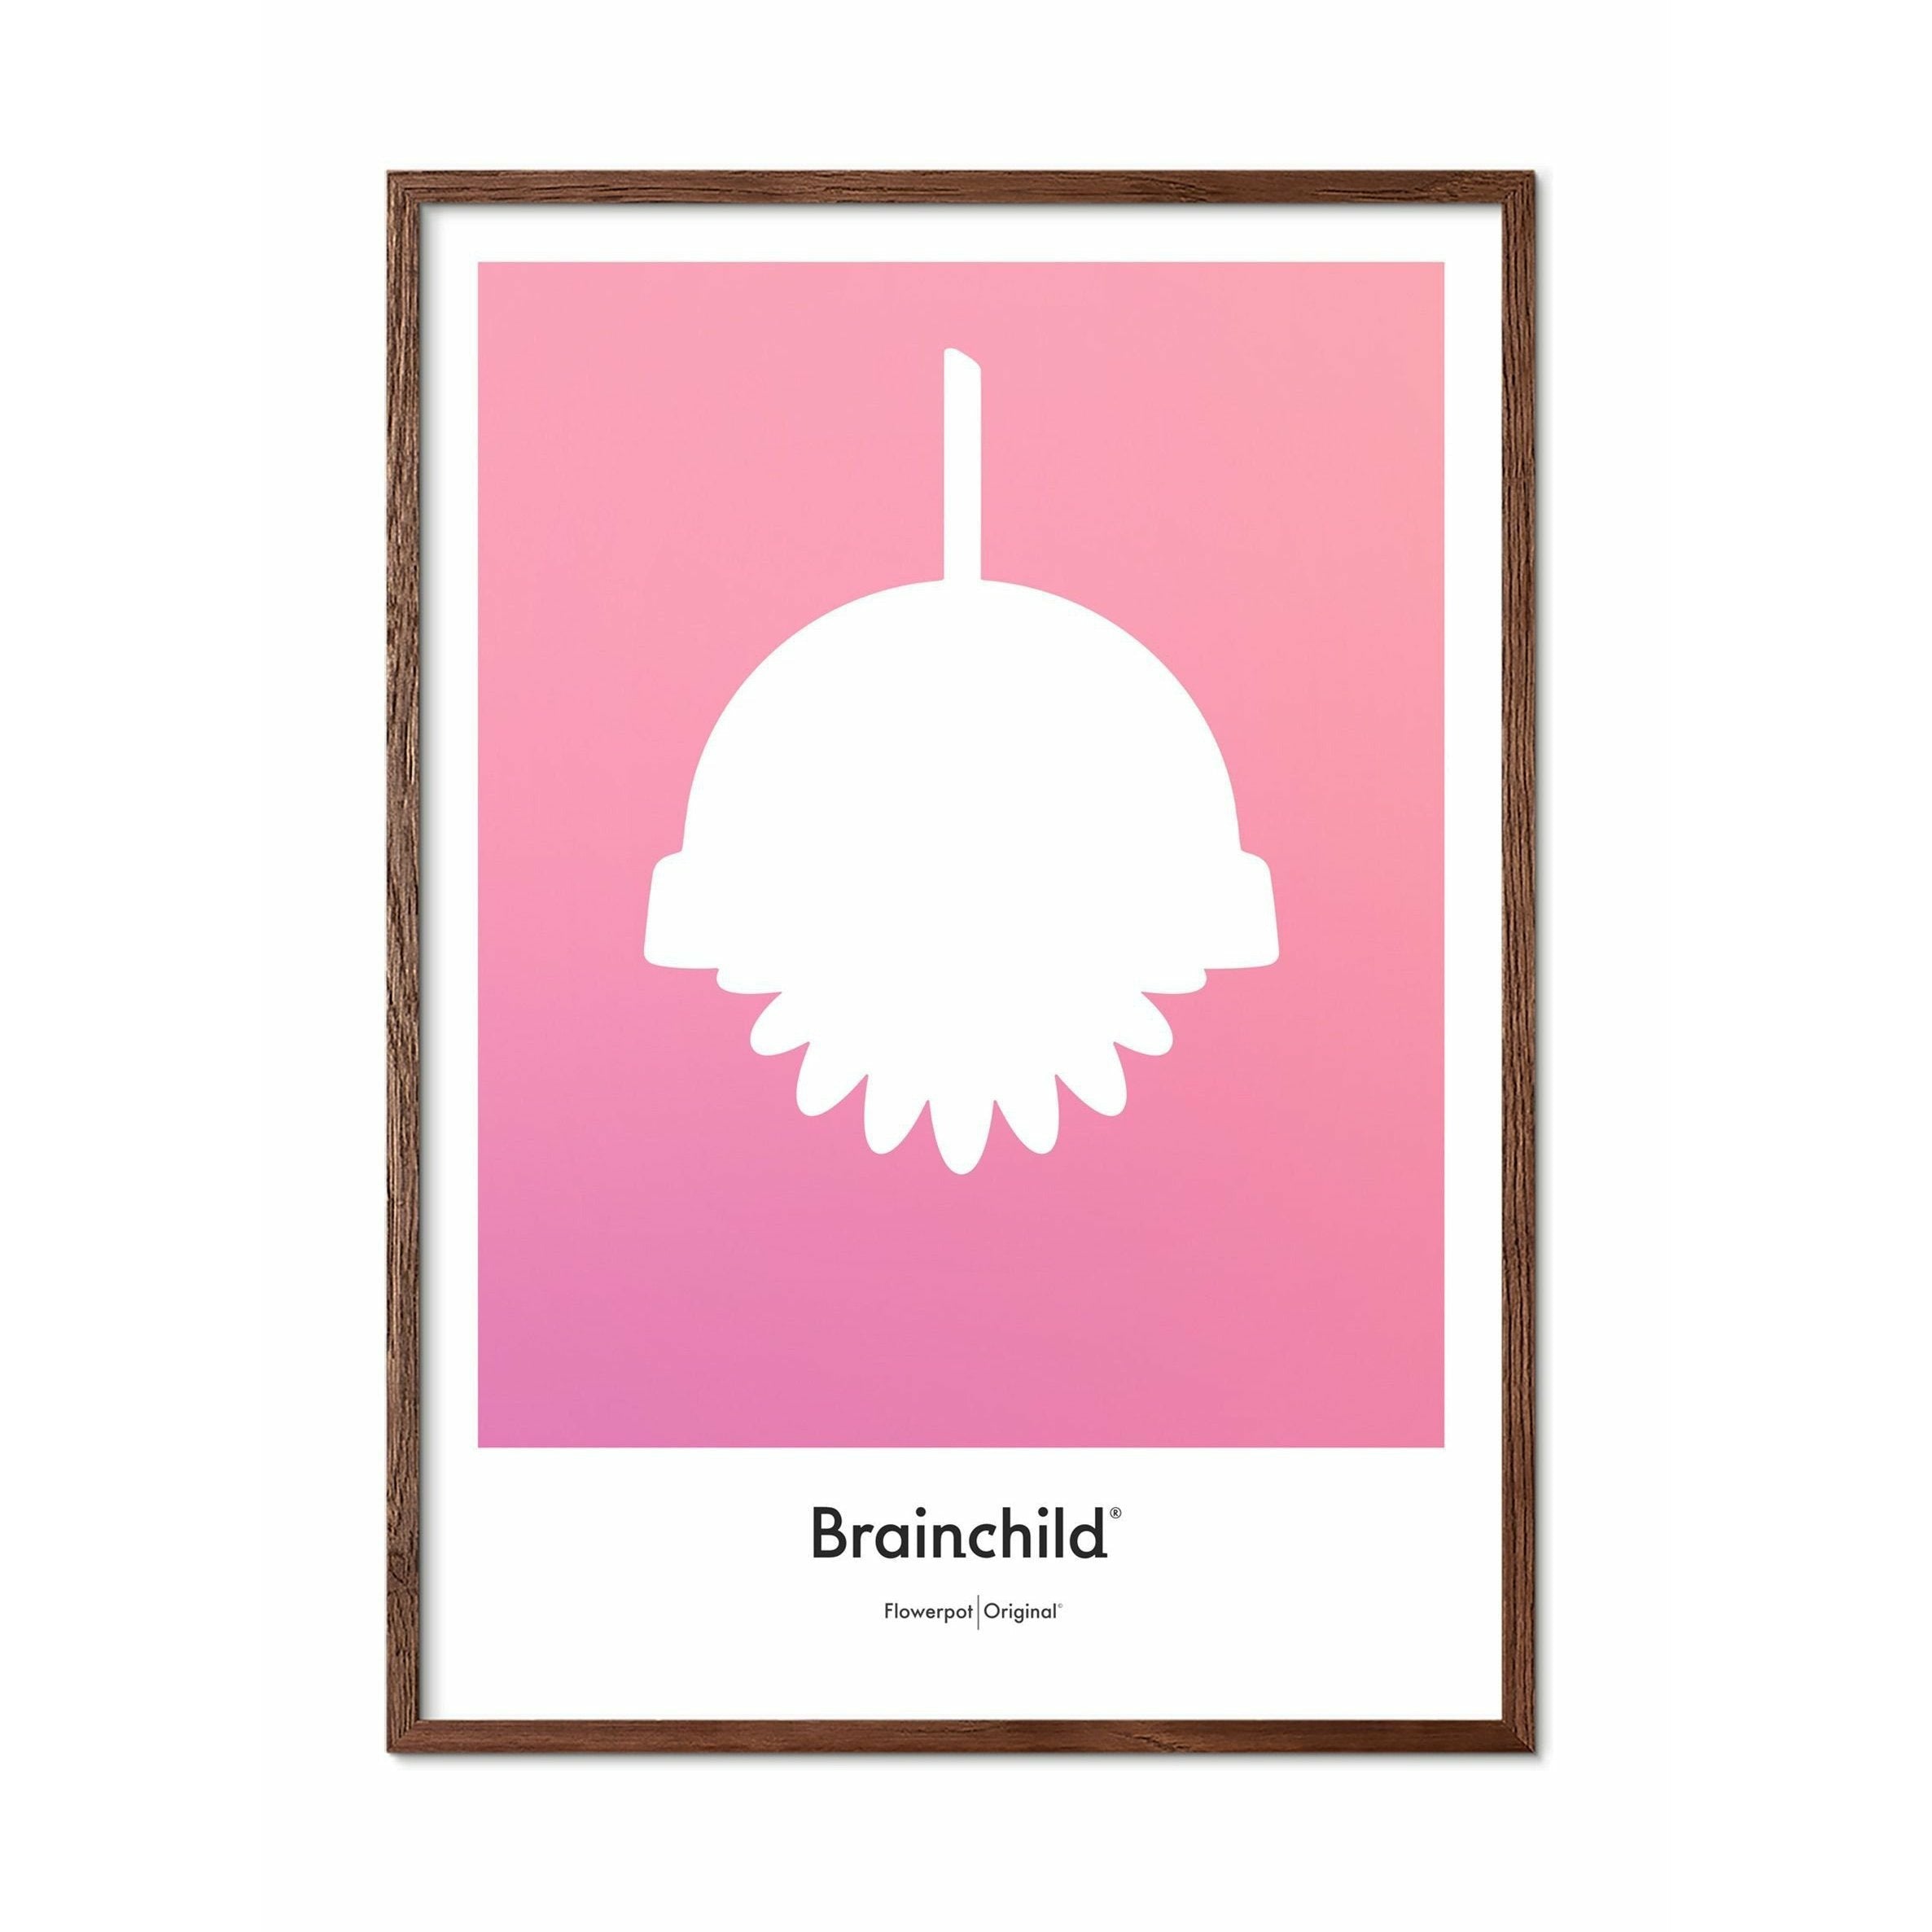 Brainchild Flowerpot Designikon Plakat, Ramme I Mørkt Træ 50X70 Cm, Rosa